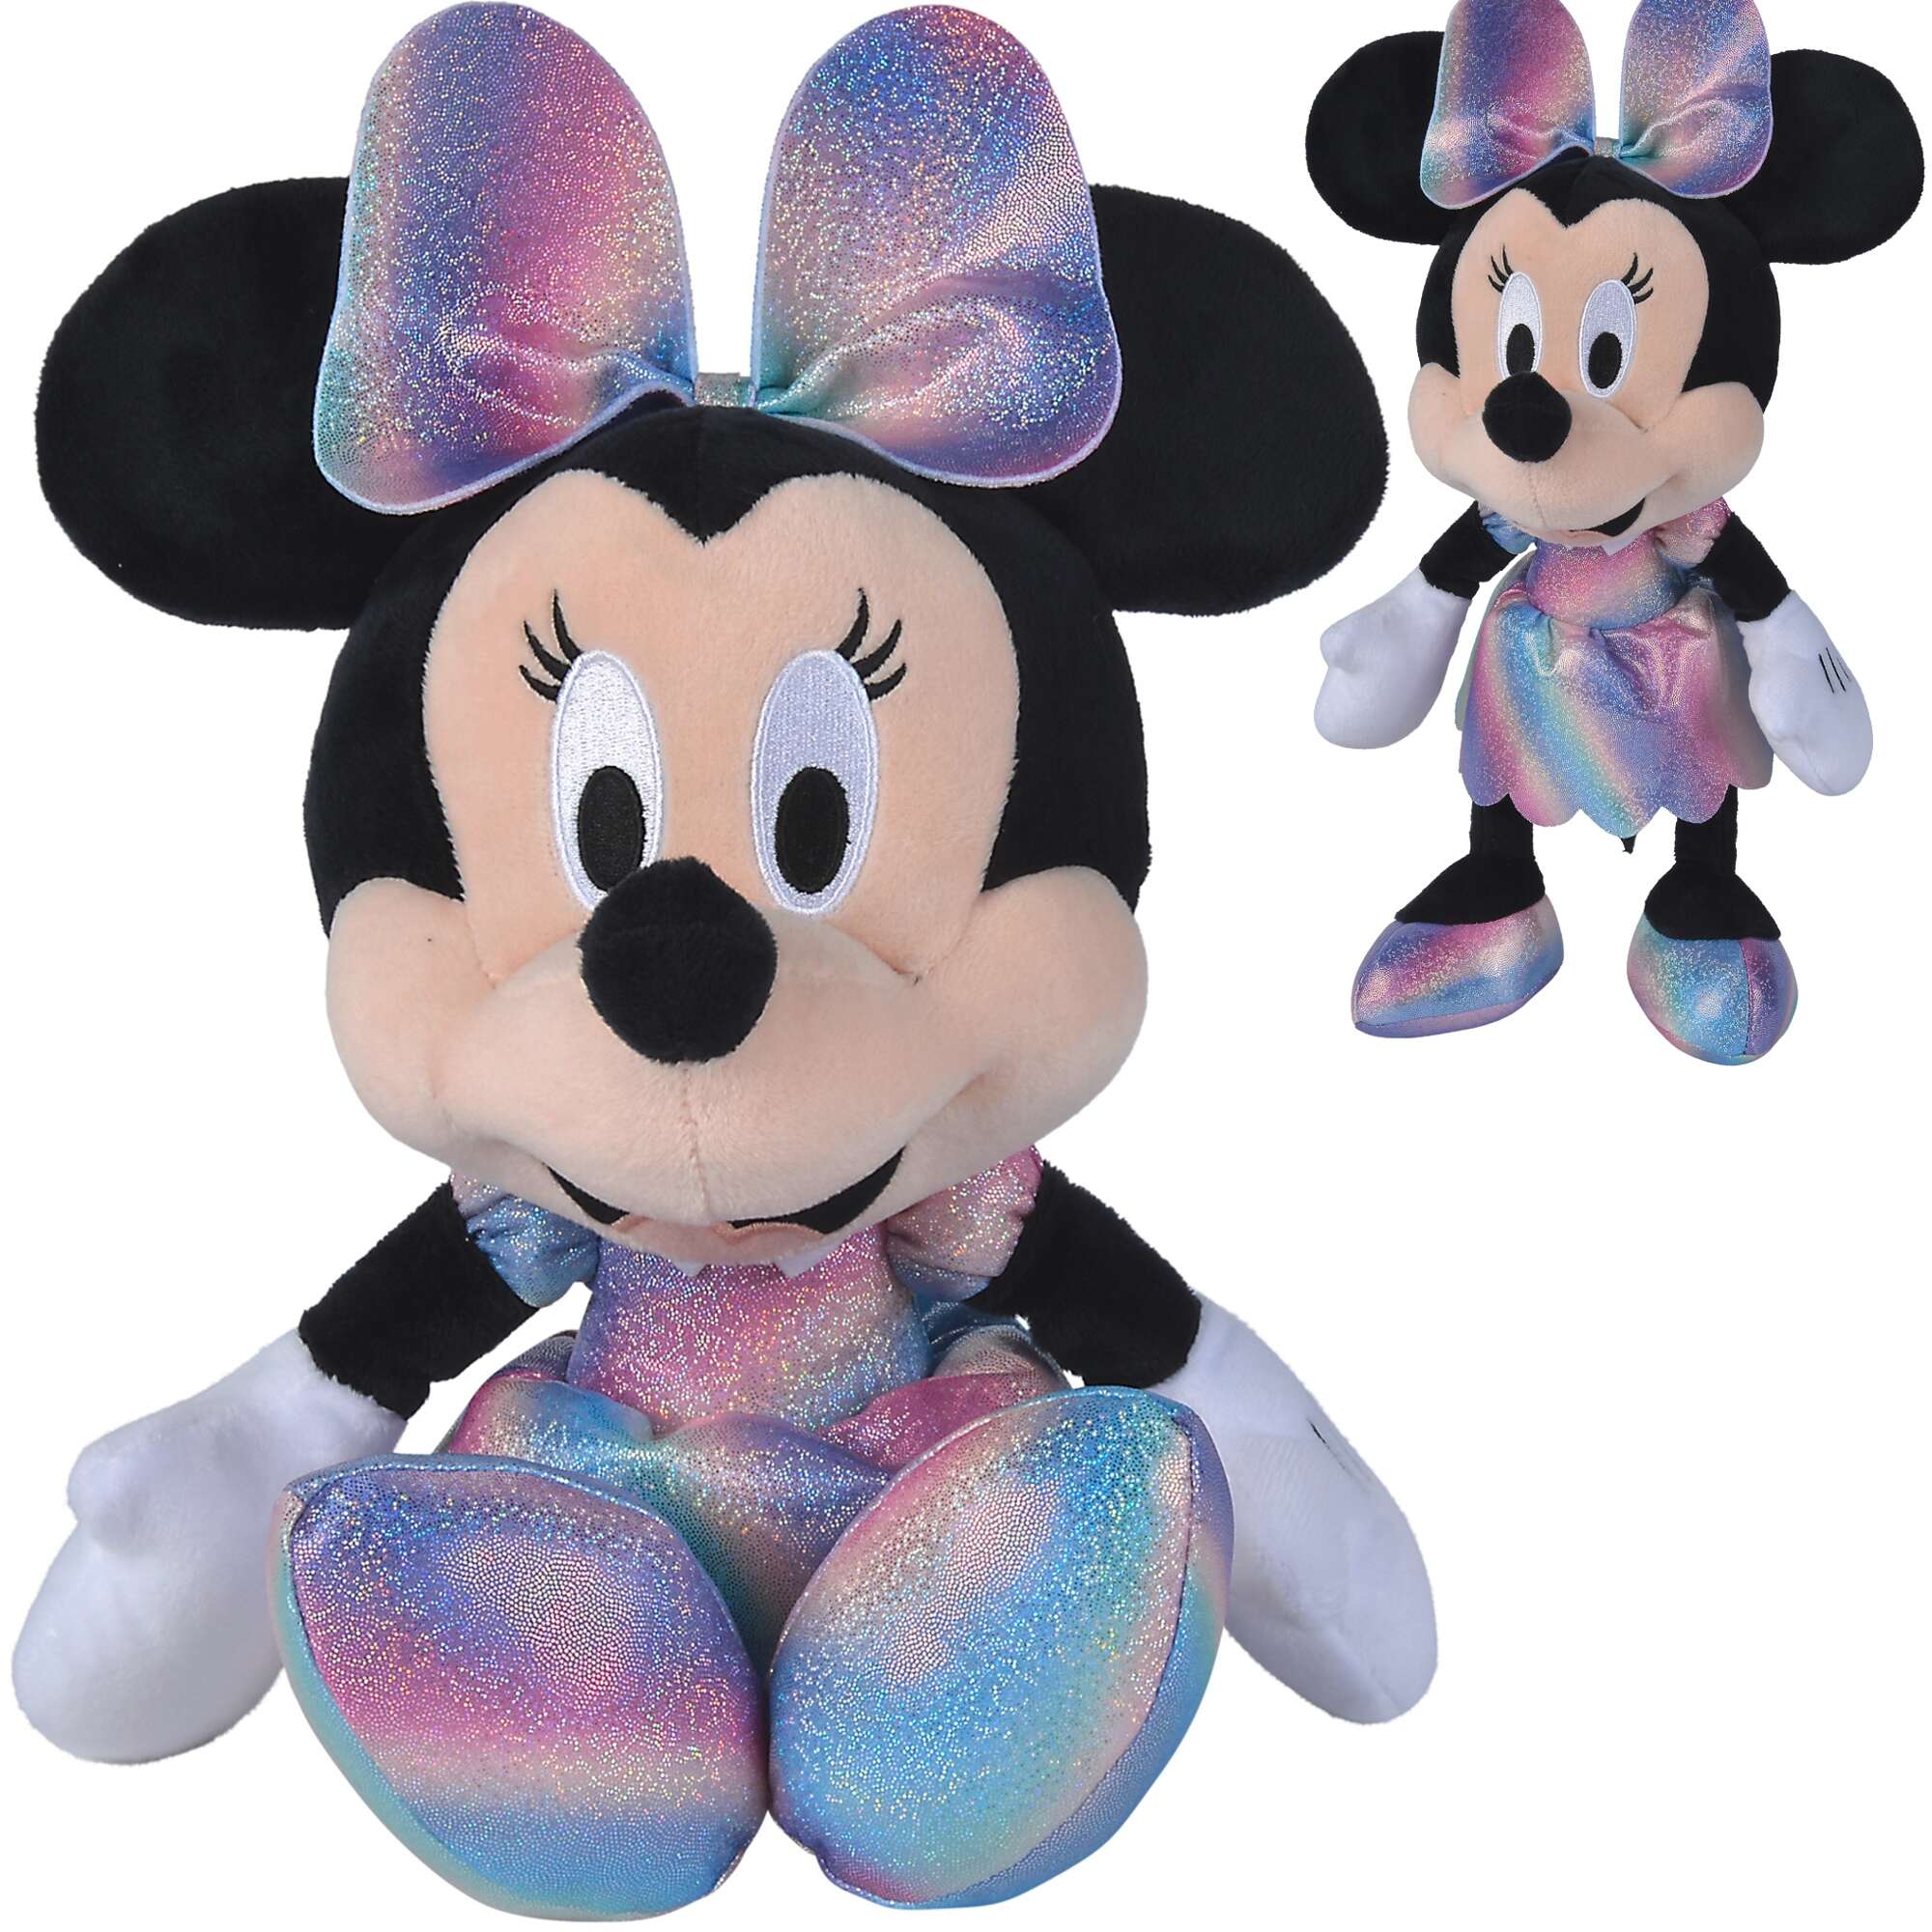 Disney 100 Maskotka Myszka Minnie Mikka przytulnka party kolorowy pluszak 36 cm